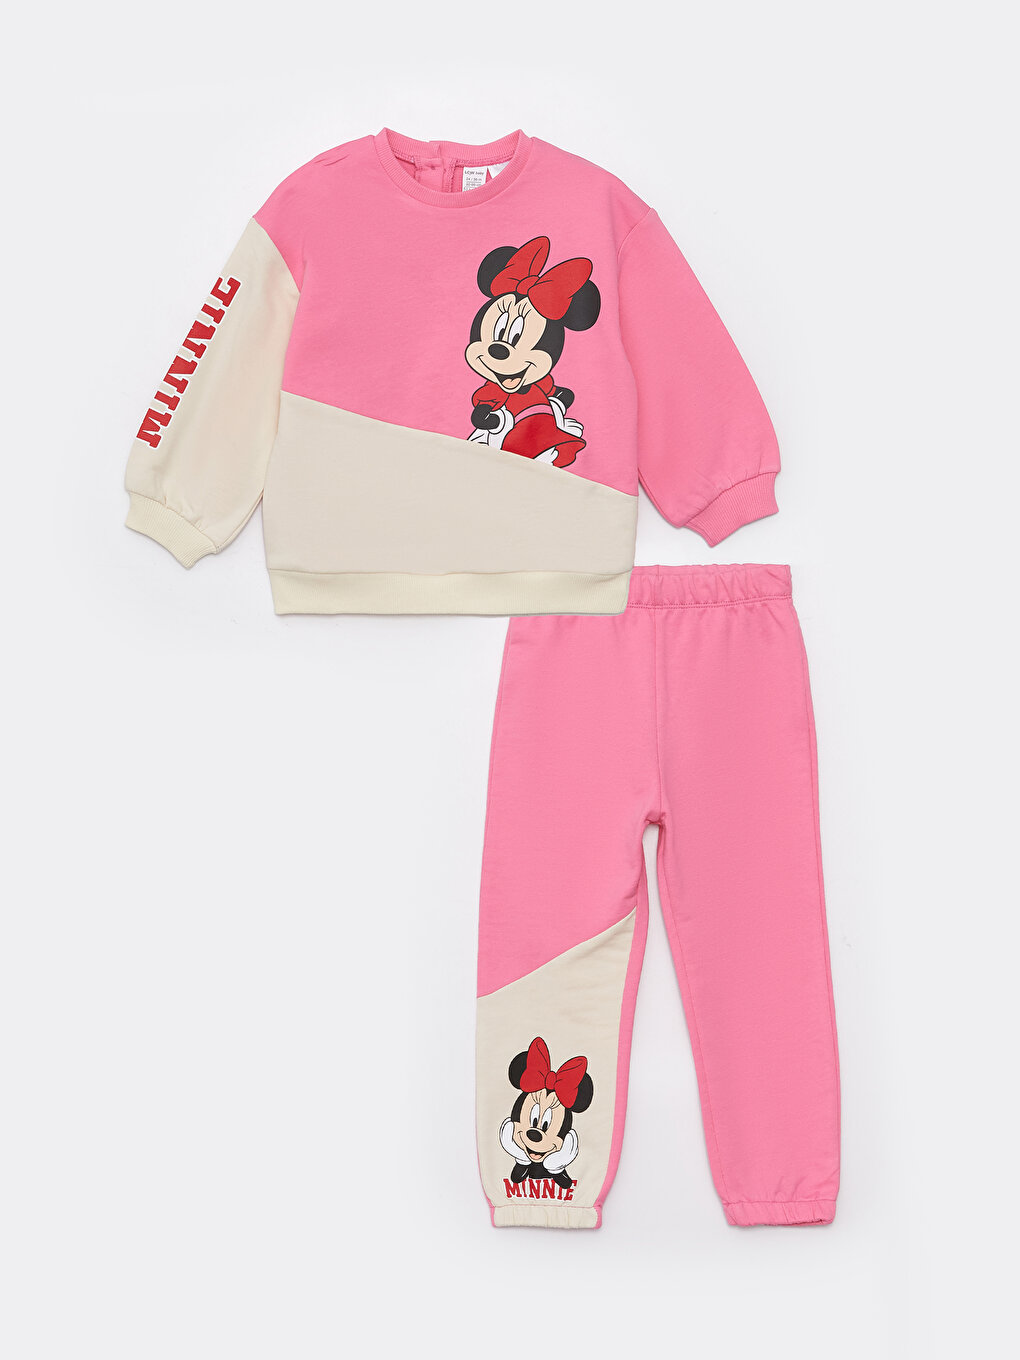 Crew Neck Long Sleeved Minnie Mouse Printed Baby Girl Sweatshirt